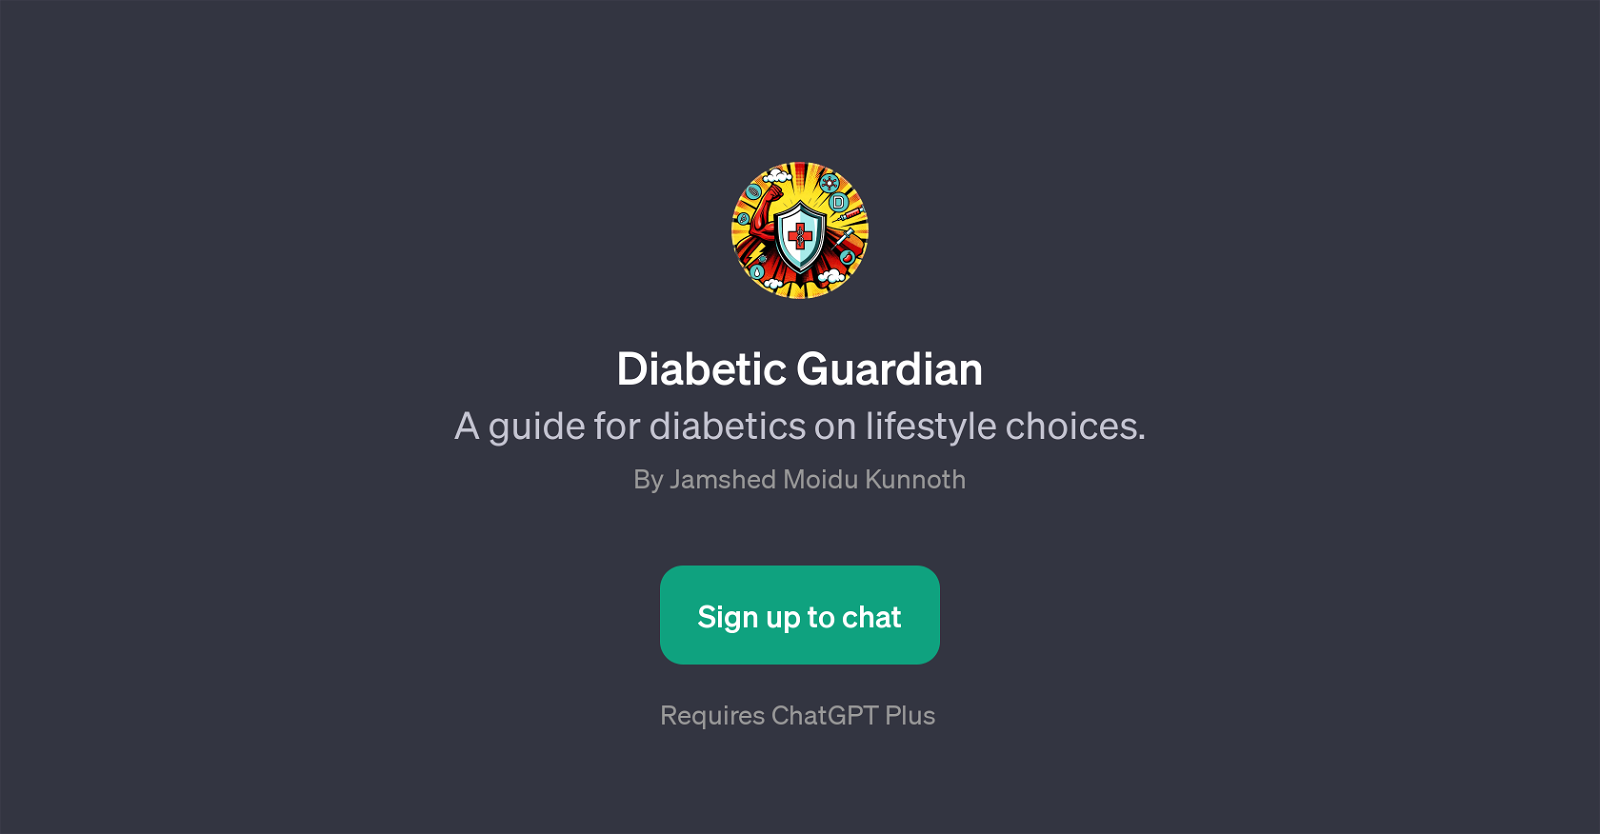 Diabetic Guardian website